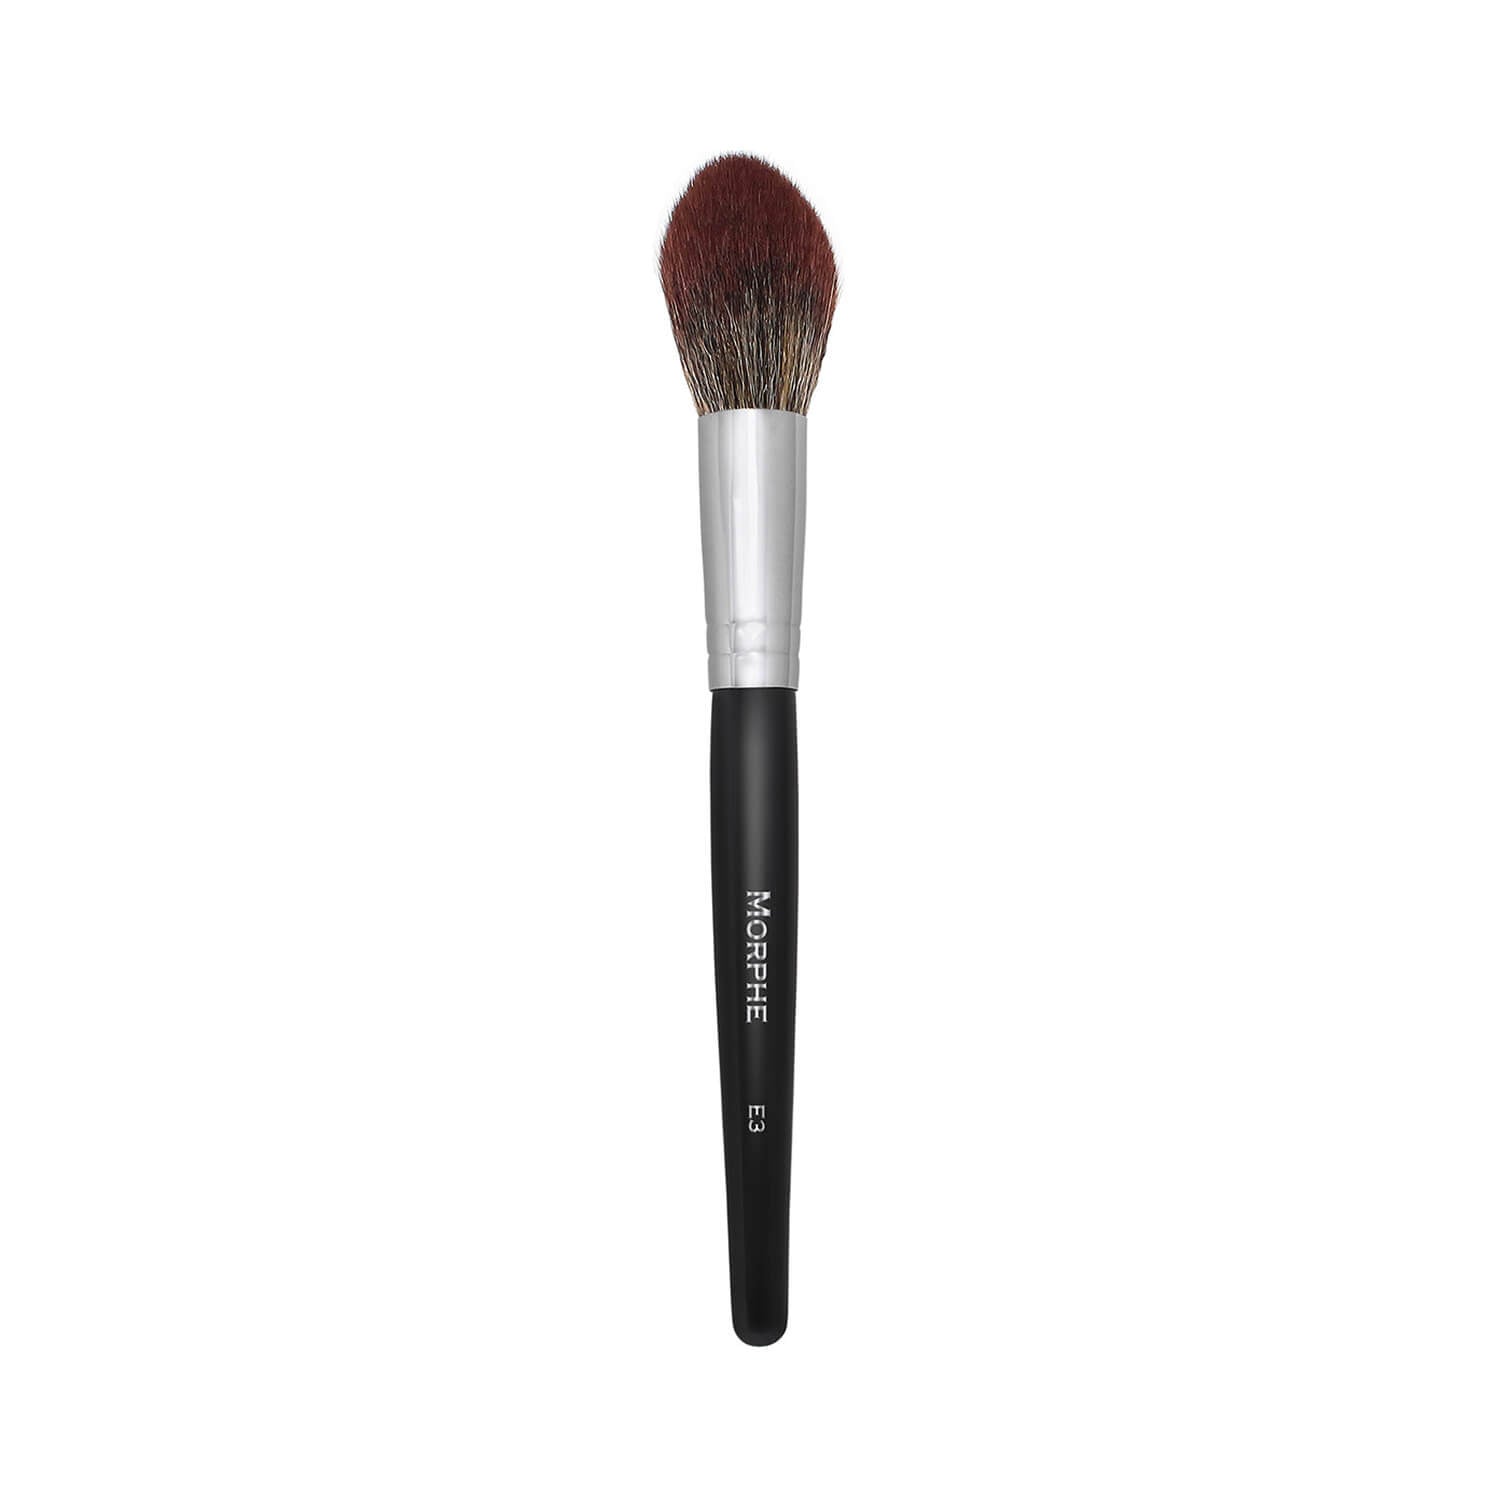 Morphe Cosmetics E3 Precision Pointed Powder Brush